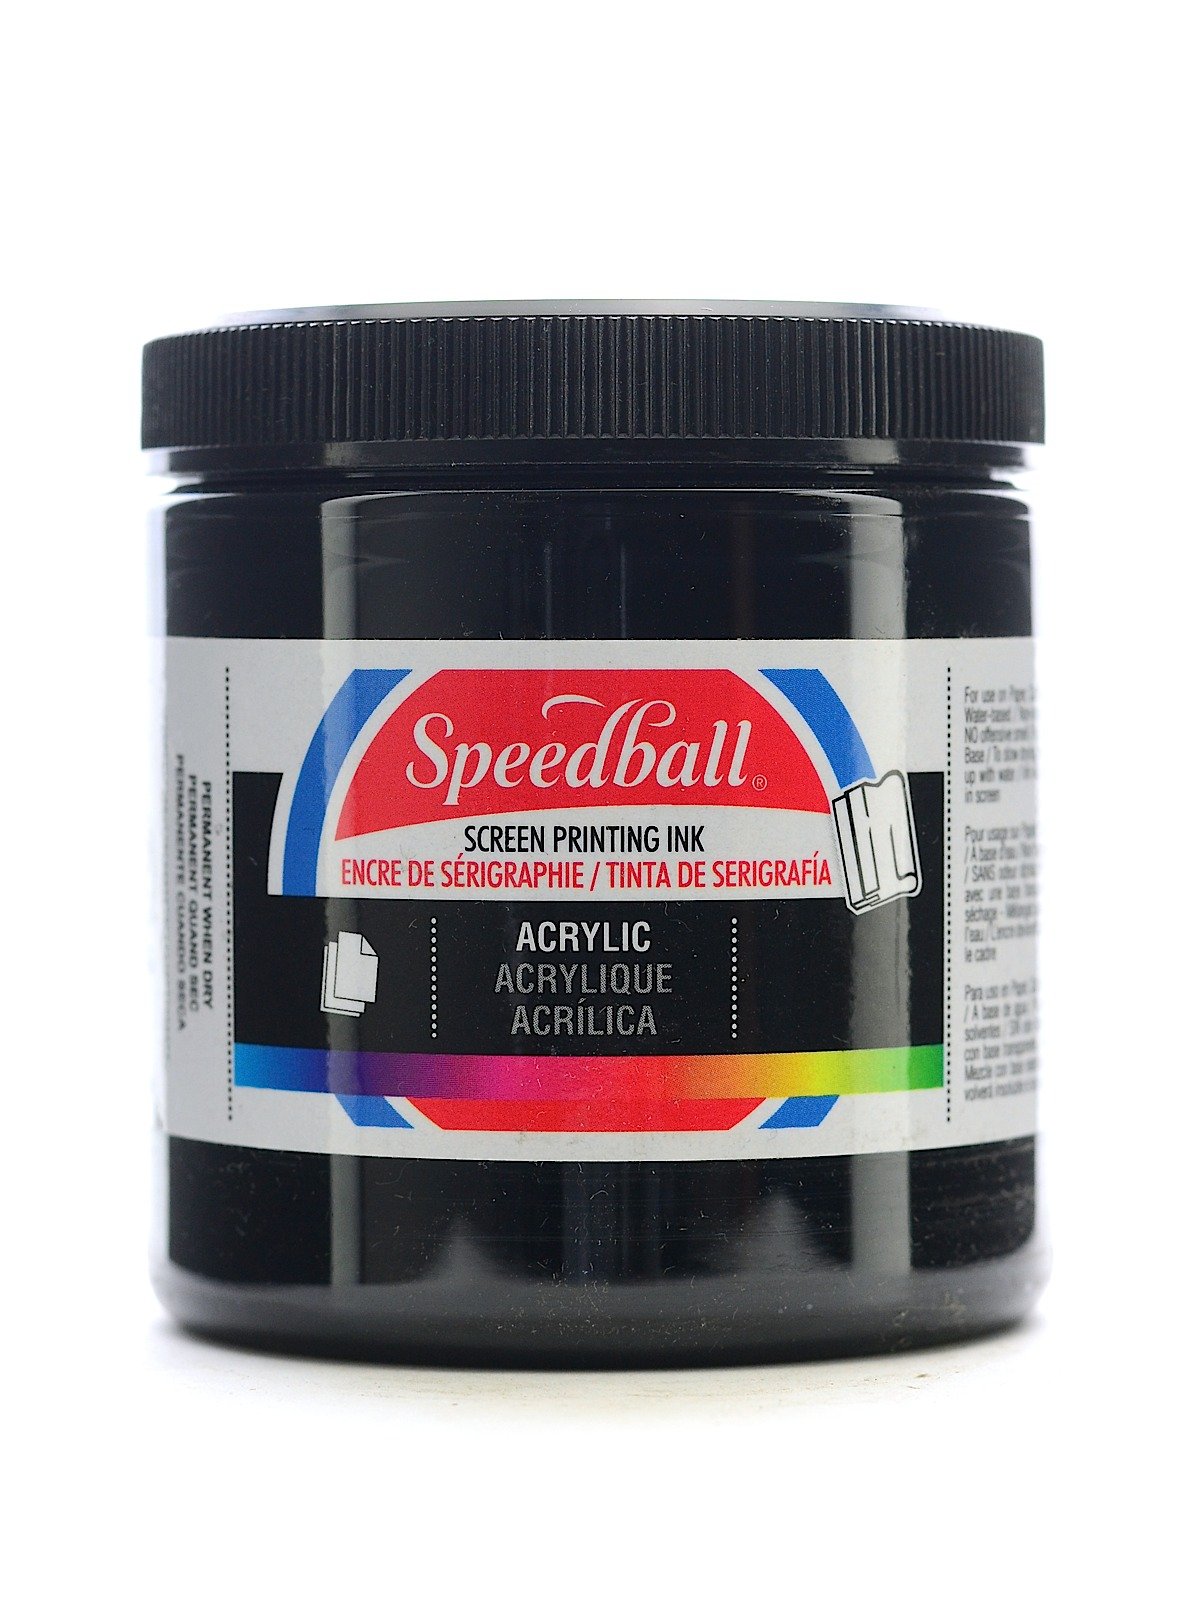 Speedball Acrylic Screen Printing Ink Black 8oz - MICA Store